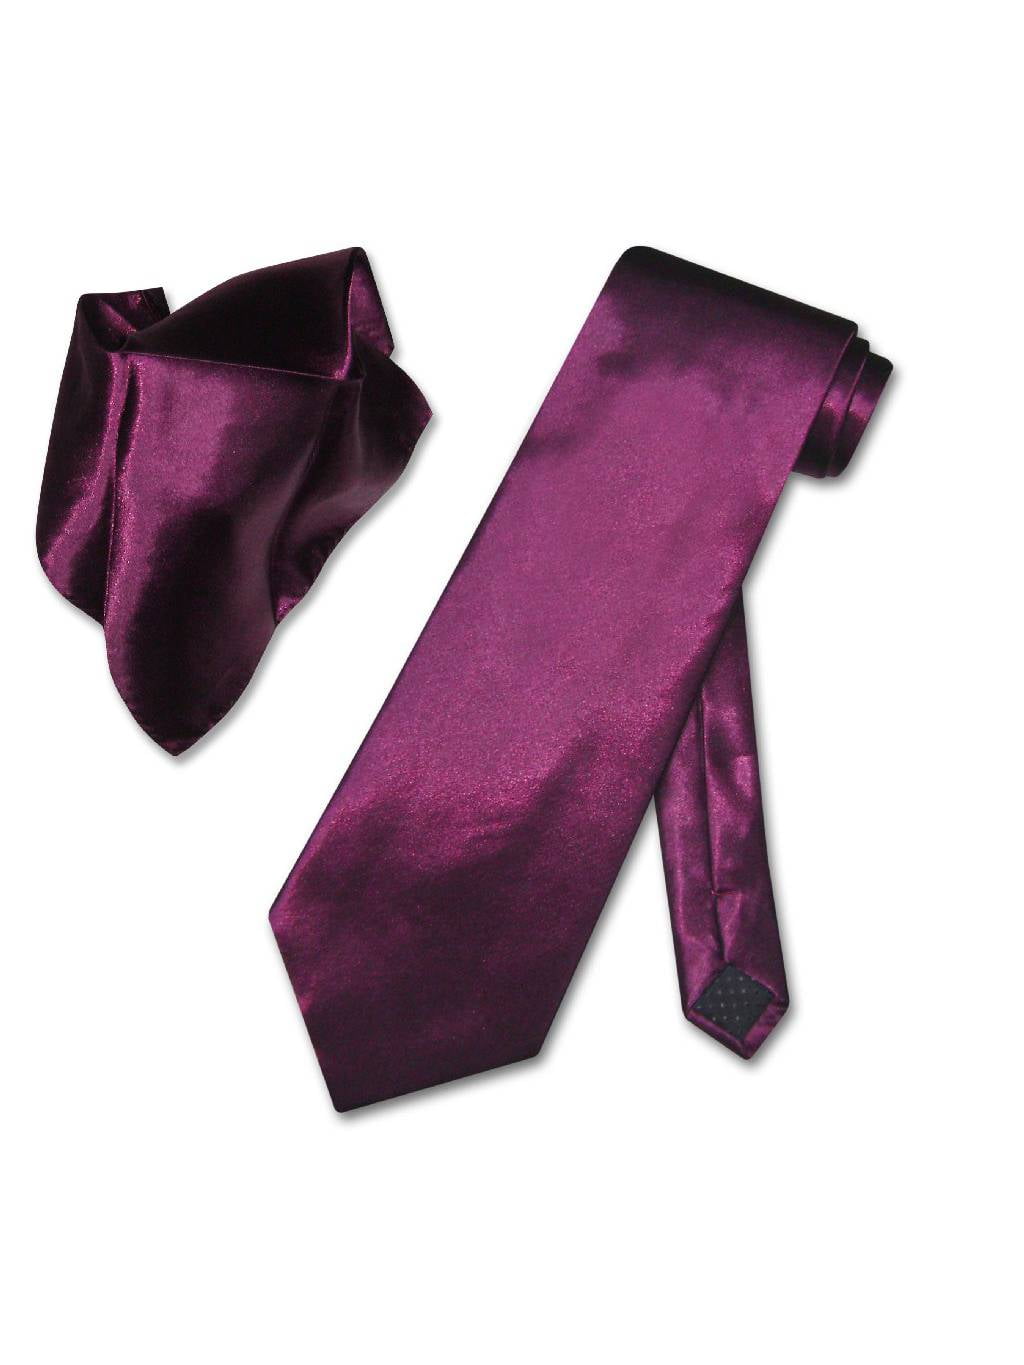 New formal men's polyester extra long necktie & hankie set solid dark purple 